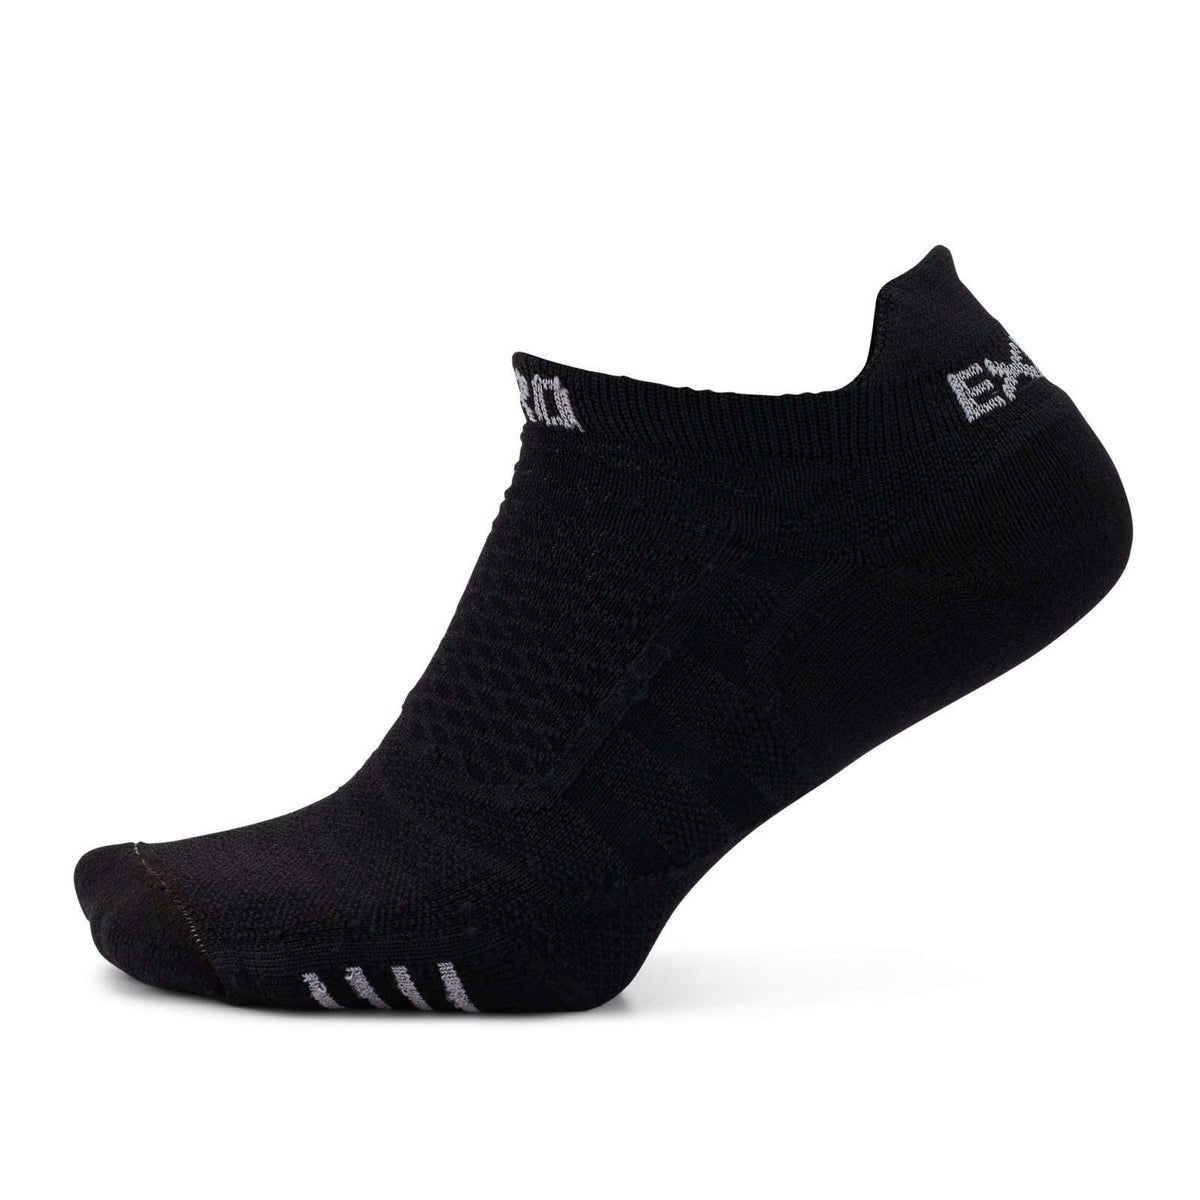 Thorlo Experia Ultra Light Mini-Crew Running Socks in Black